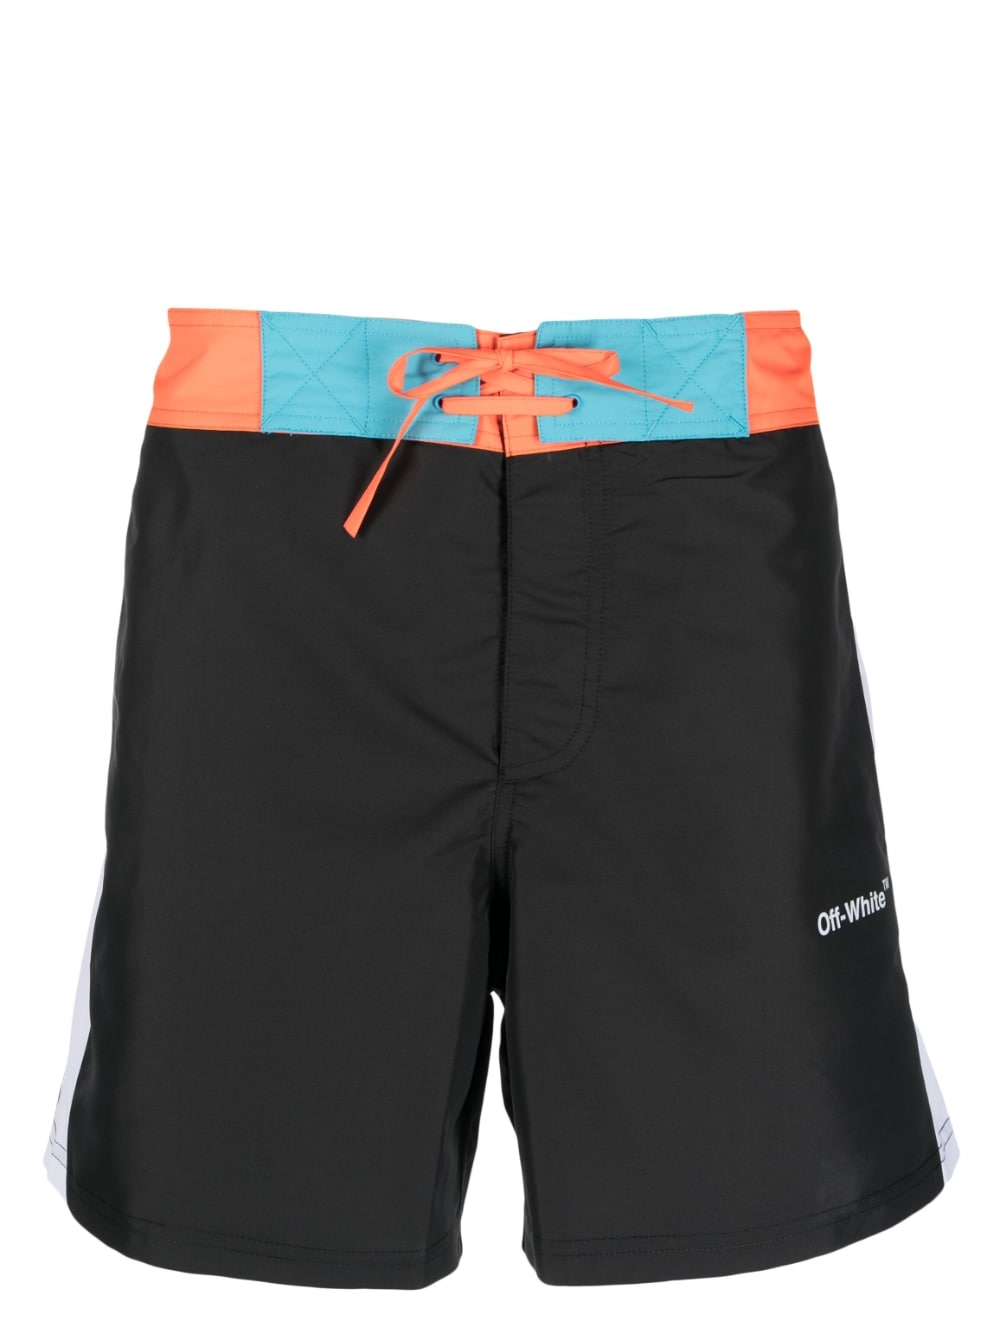 Arrows print swim shorts